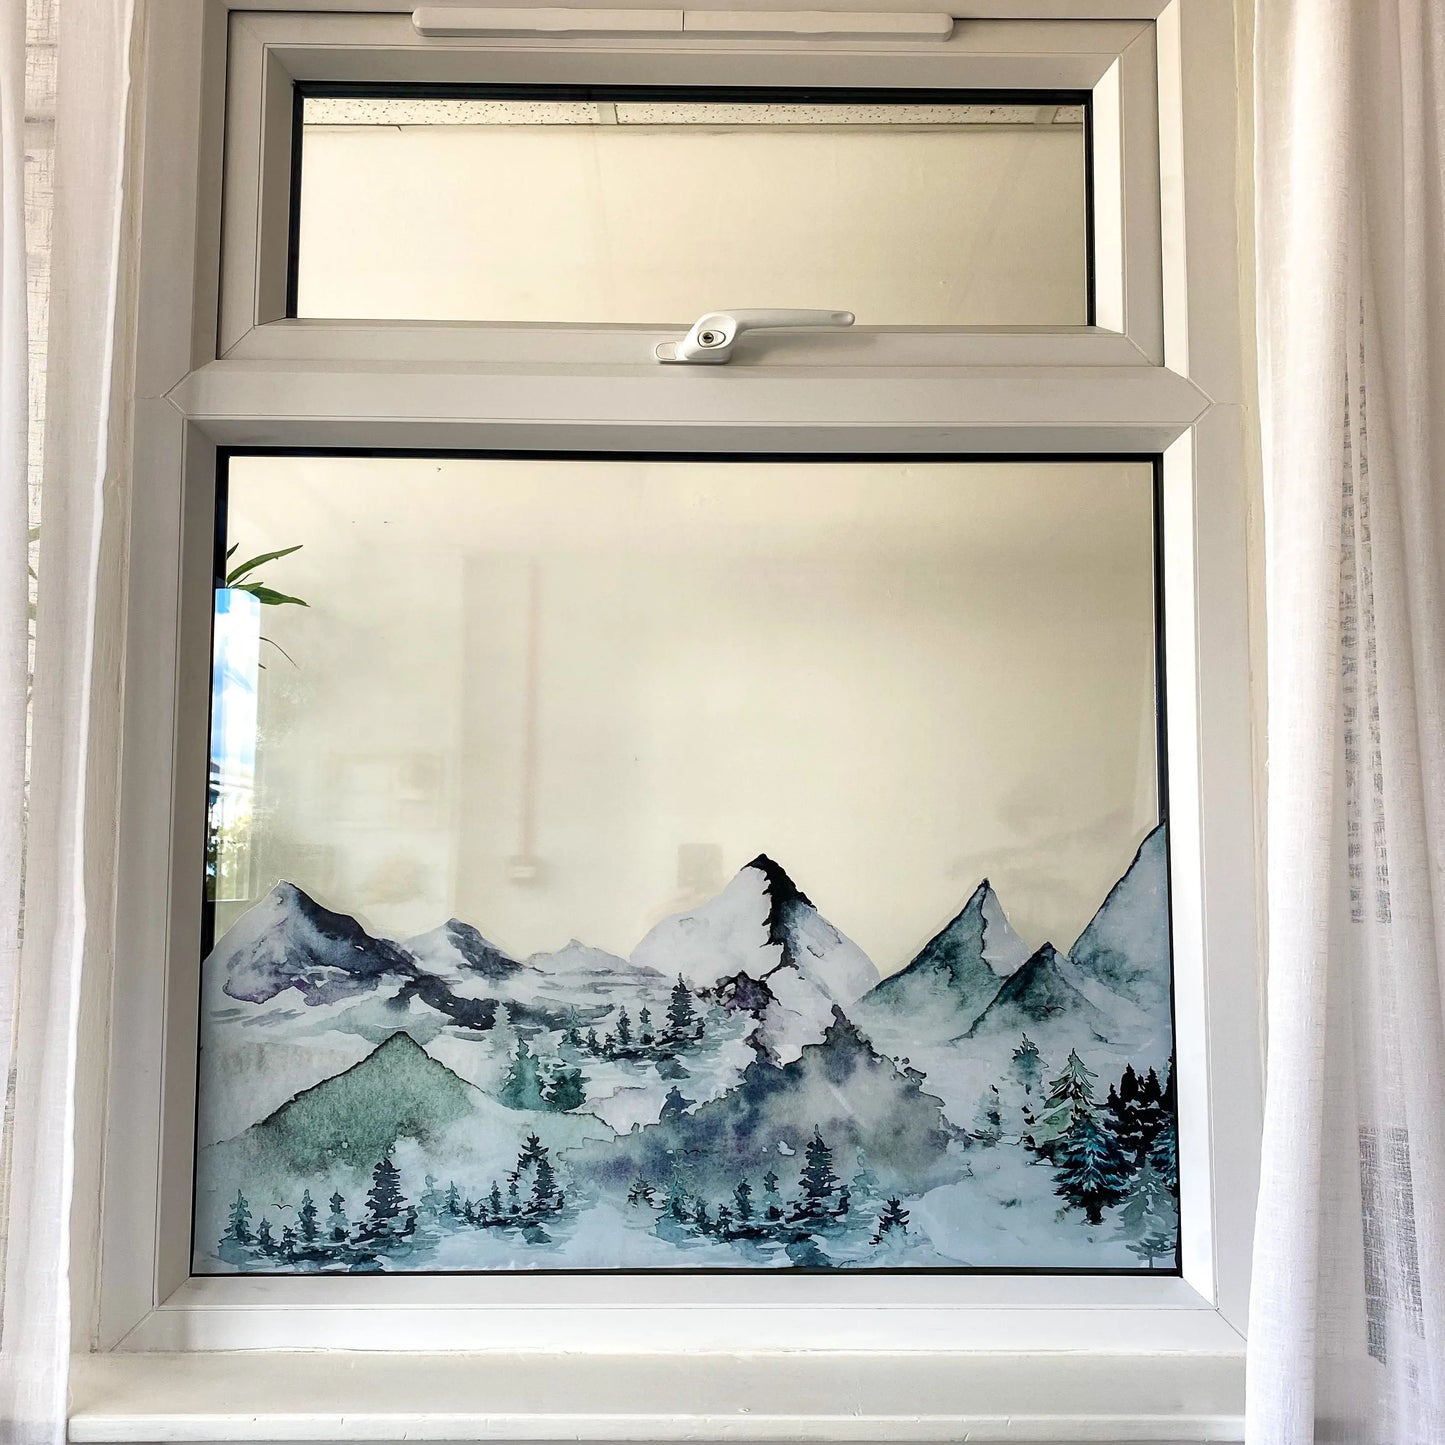 Decal Winter Forest Mountain Window Border Dizzy Duck Designs